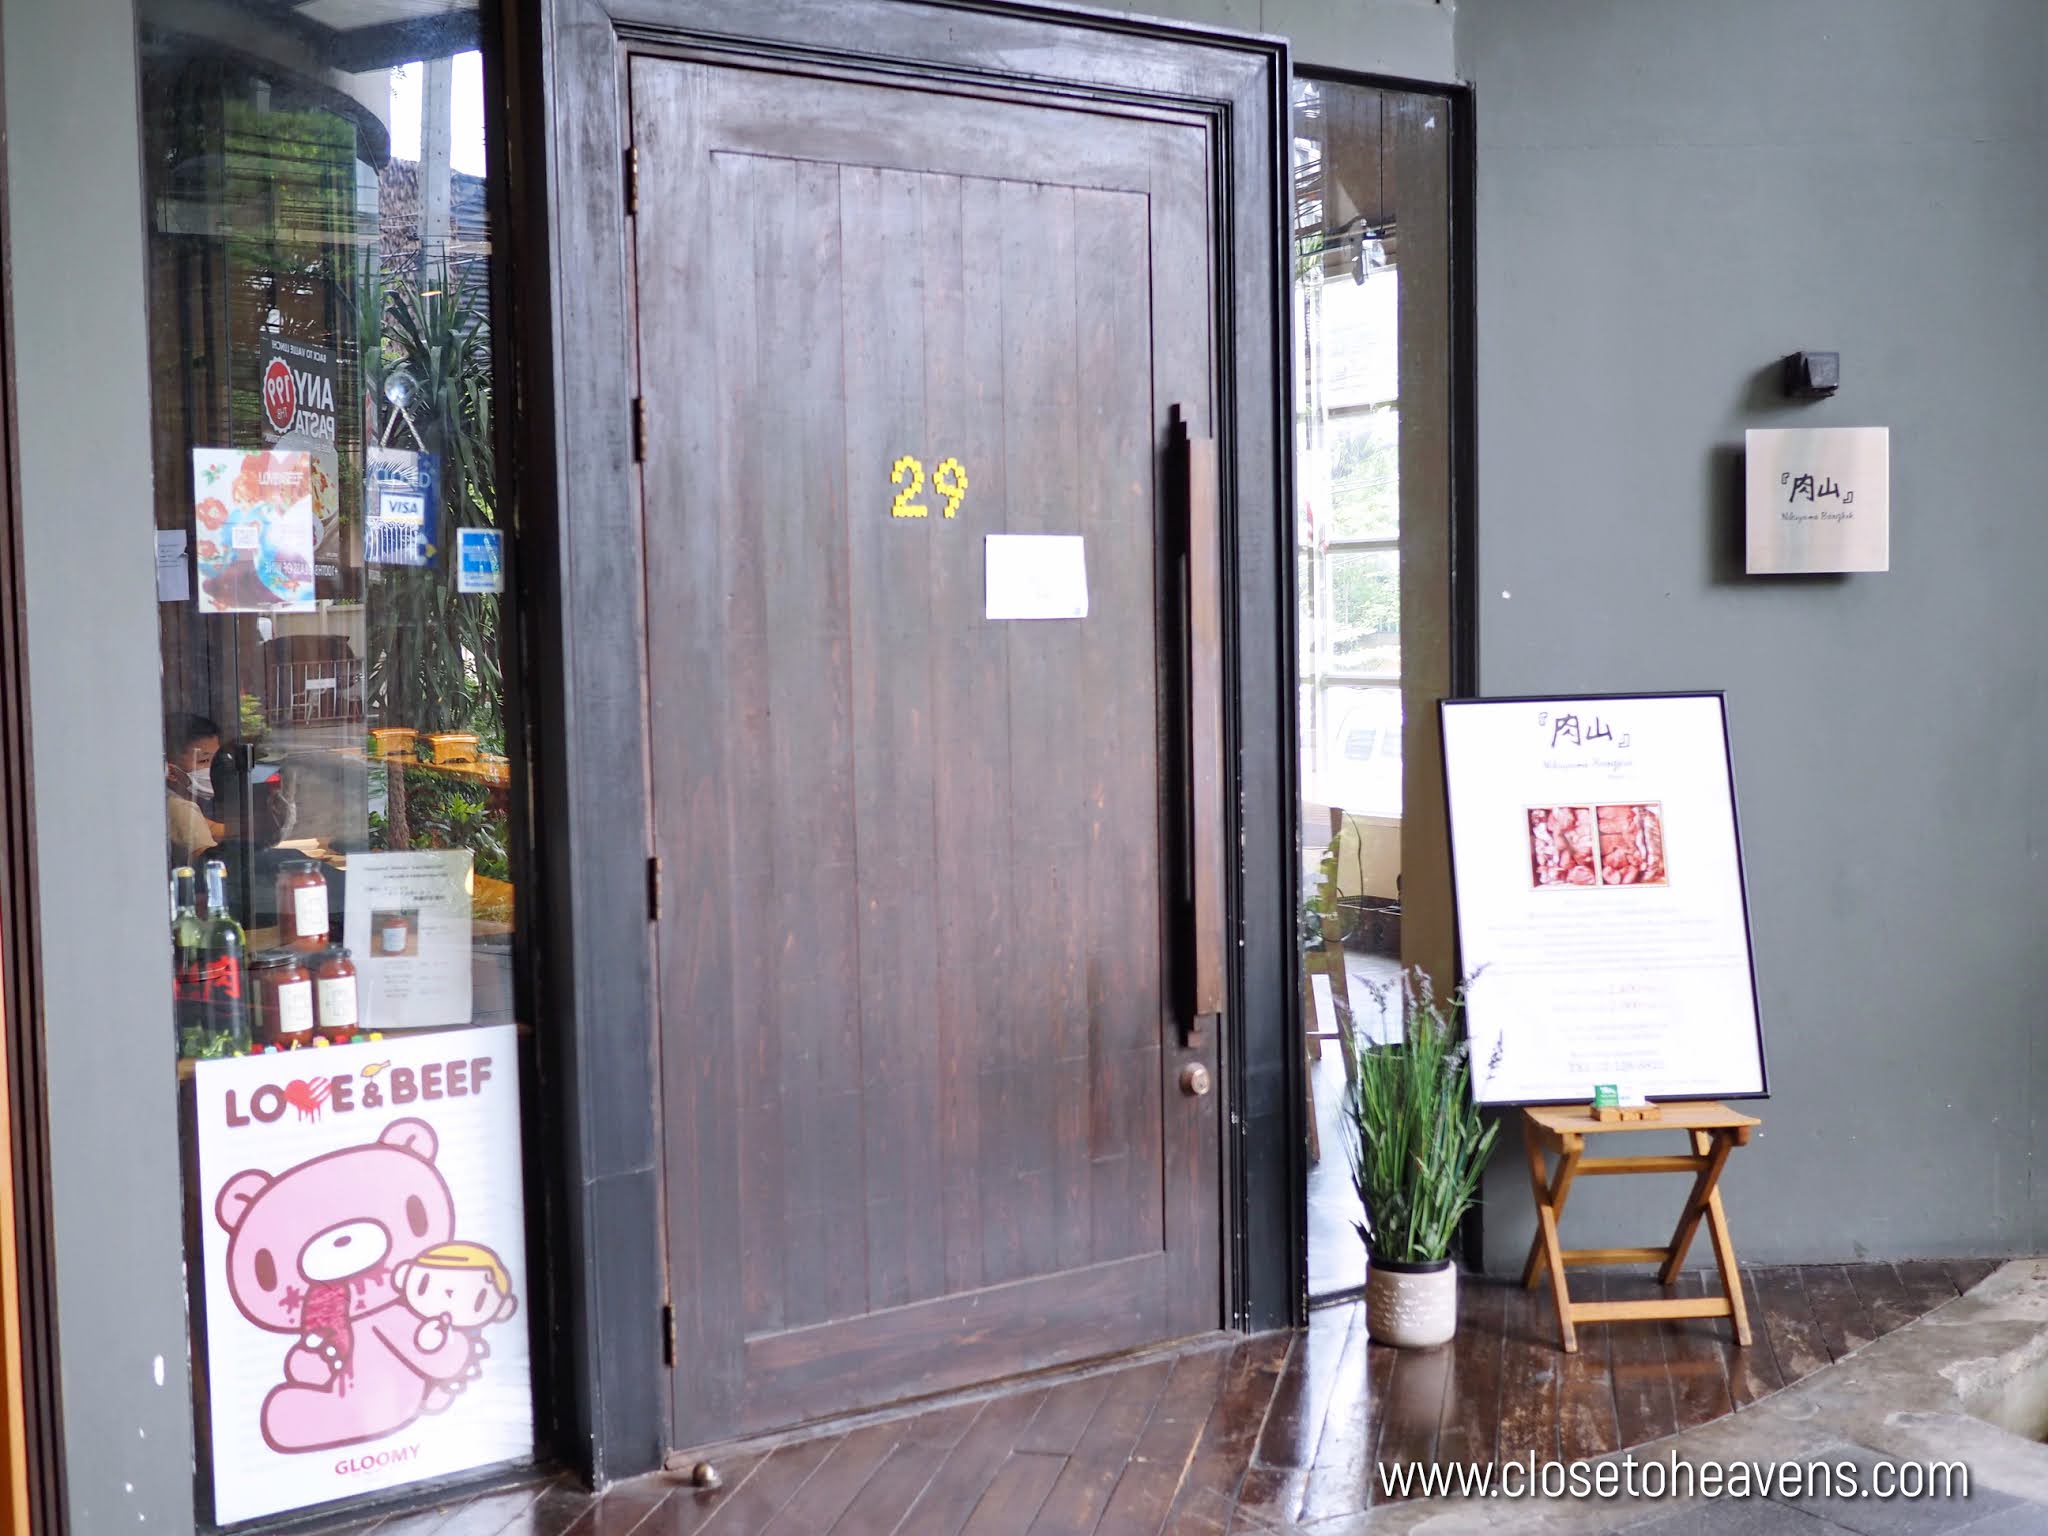 Nikuyama Bangkok | Omakase เนื้อ ญี่ปุ่น ร้านแรกในประเทศไทย